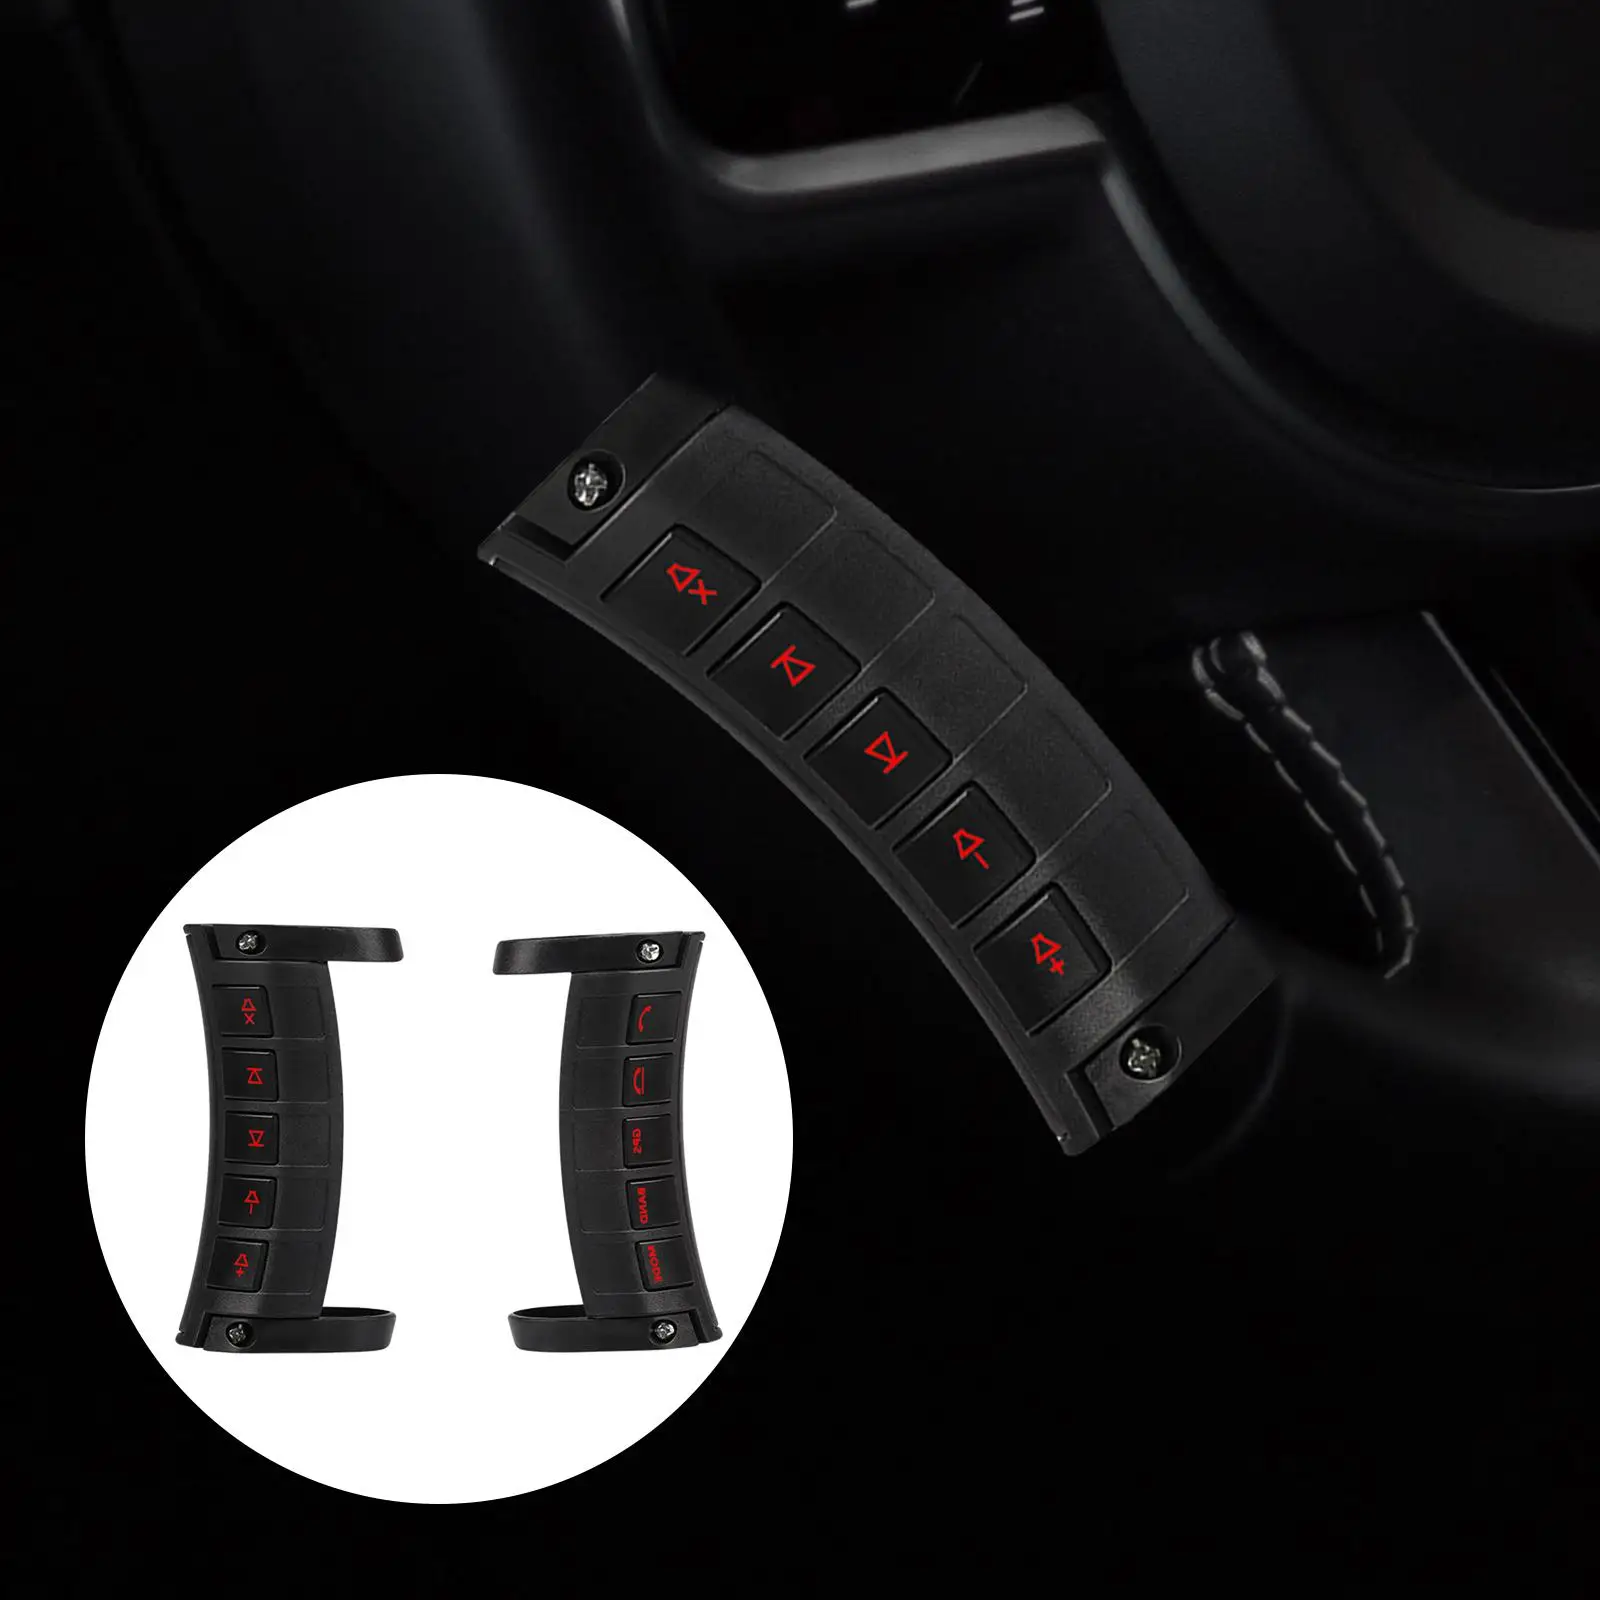 2x Car Steering Wheel Buttons Wireless 10 Keys Luminous for Navigation.